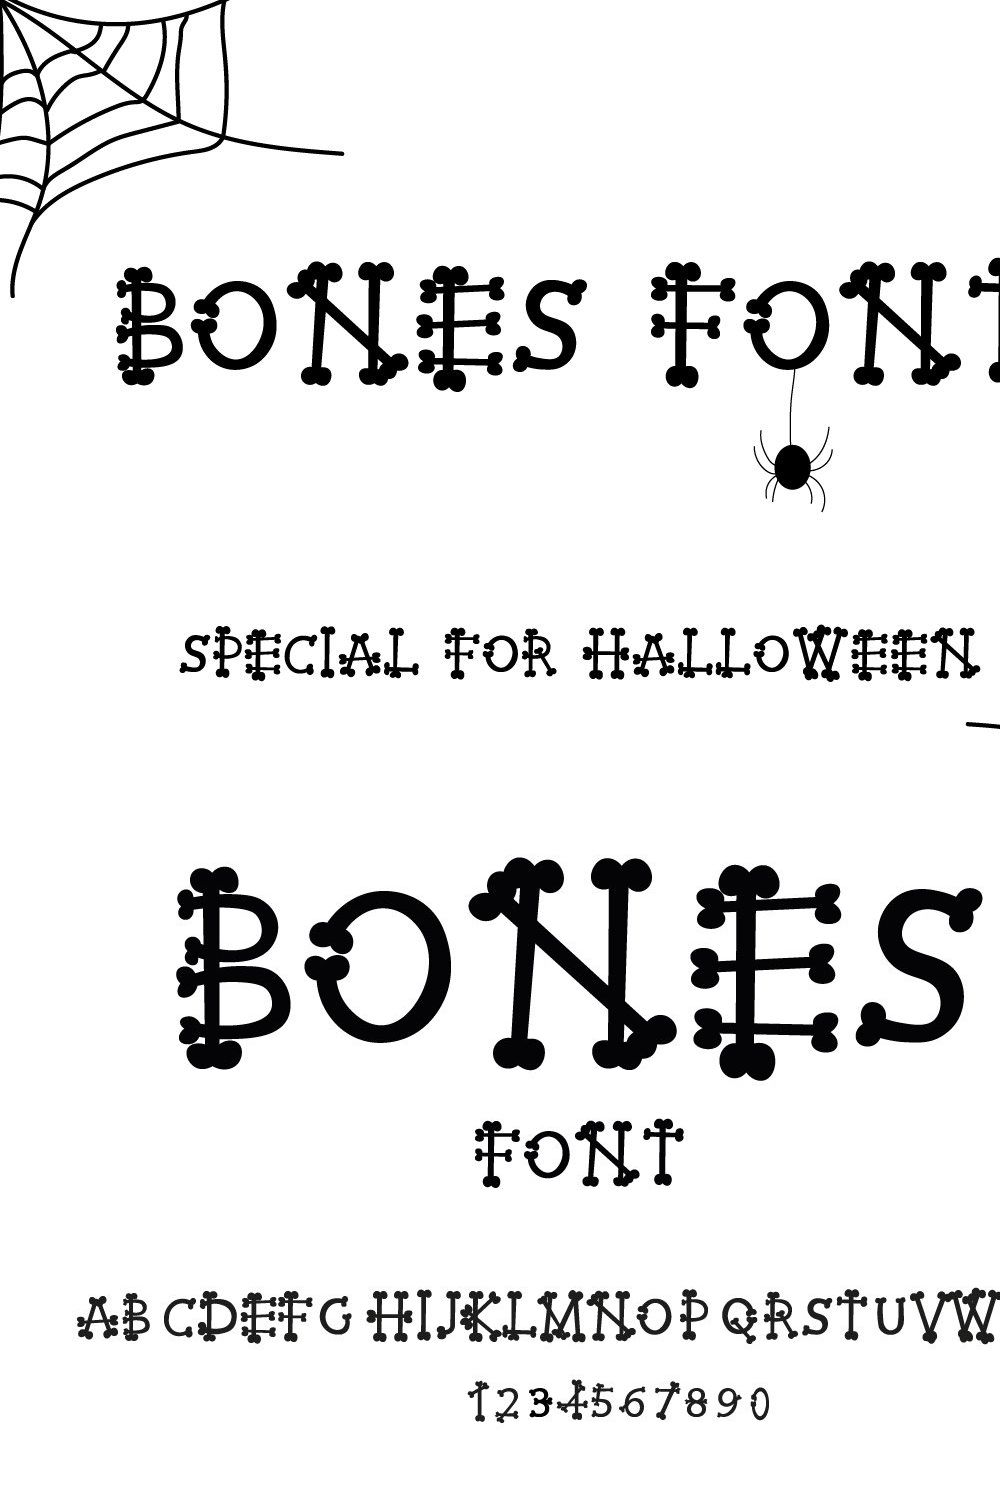 BONES HALLOWEEN  FONT pinterest preview image.